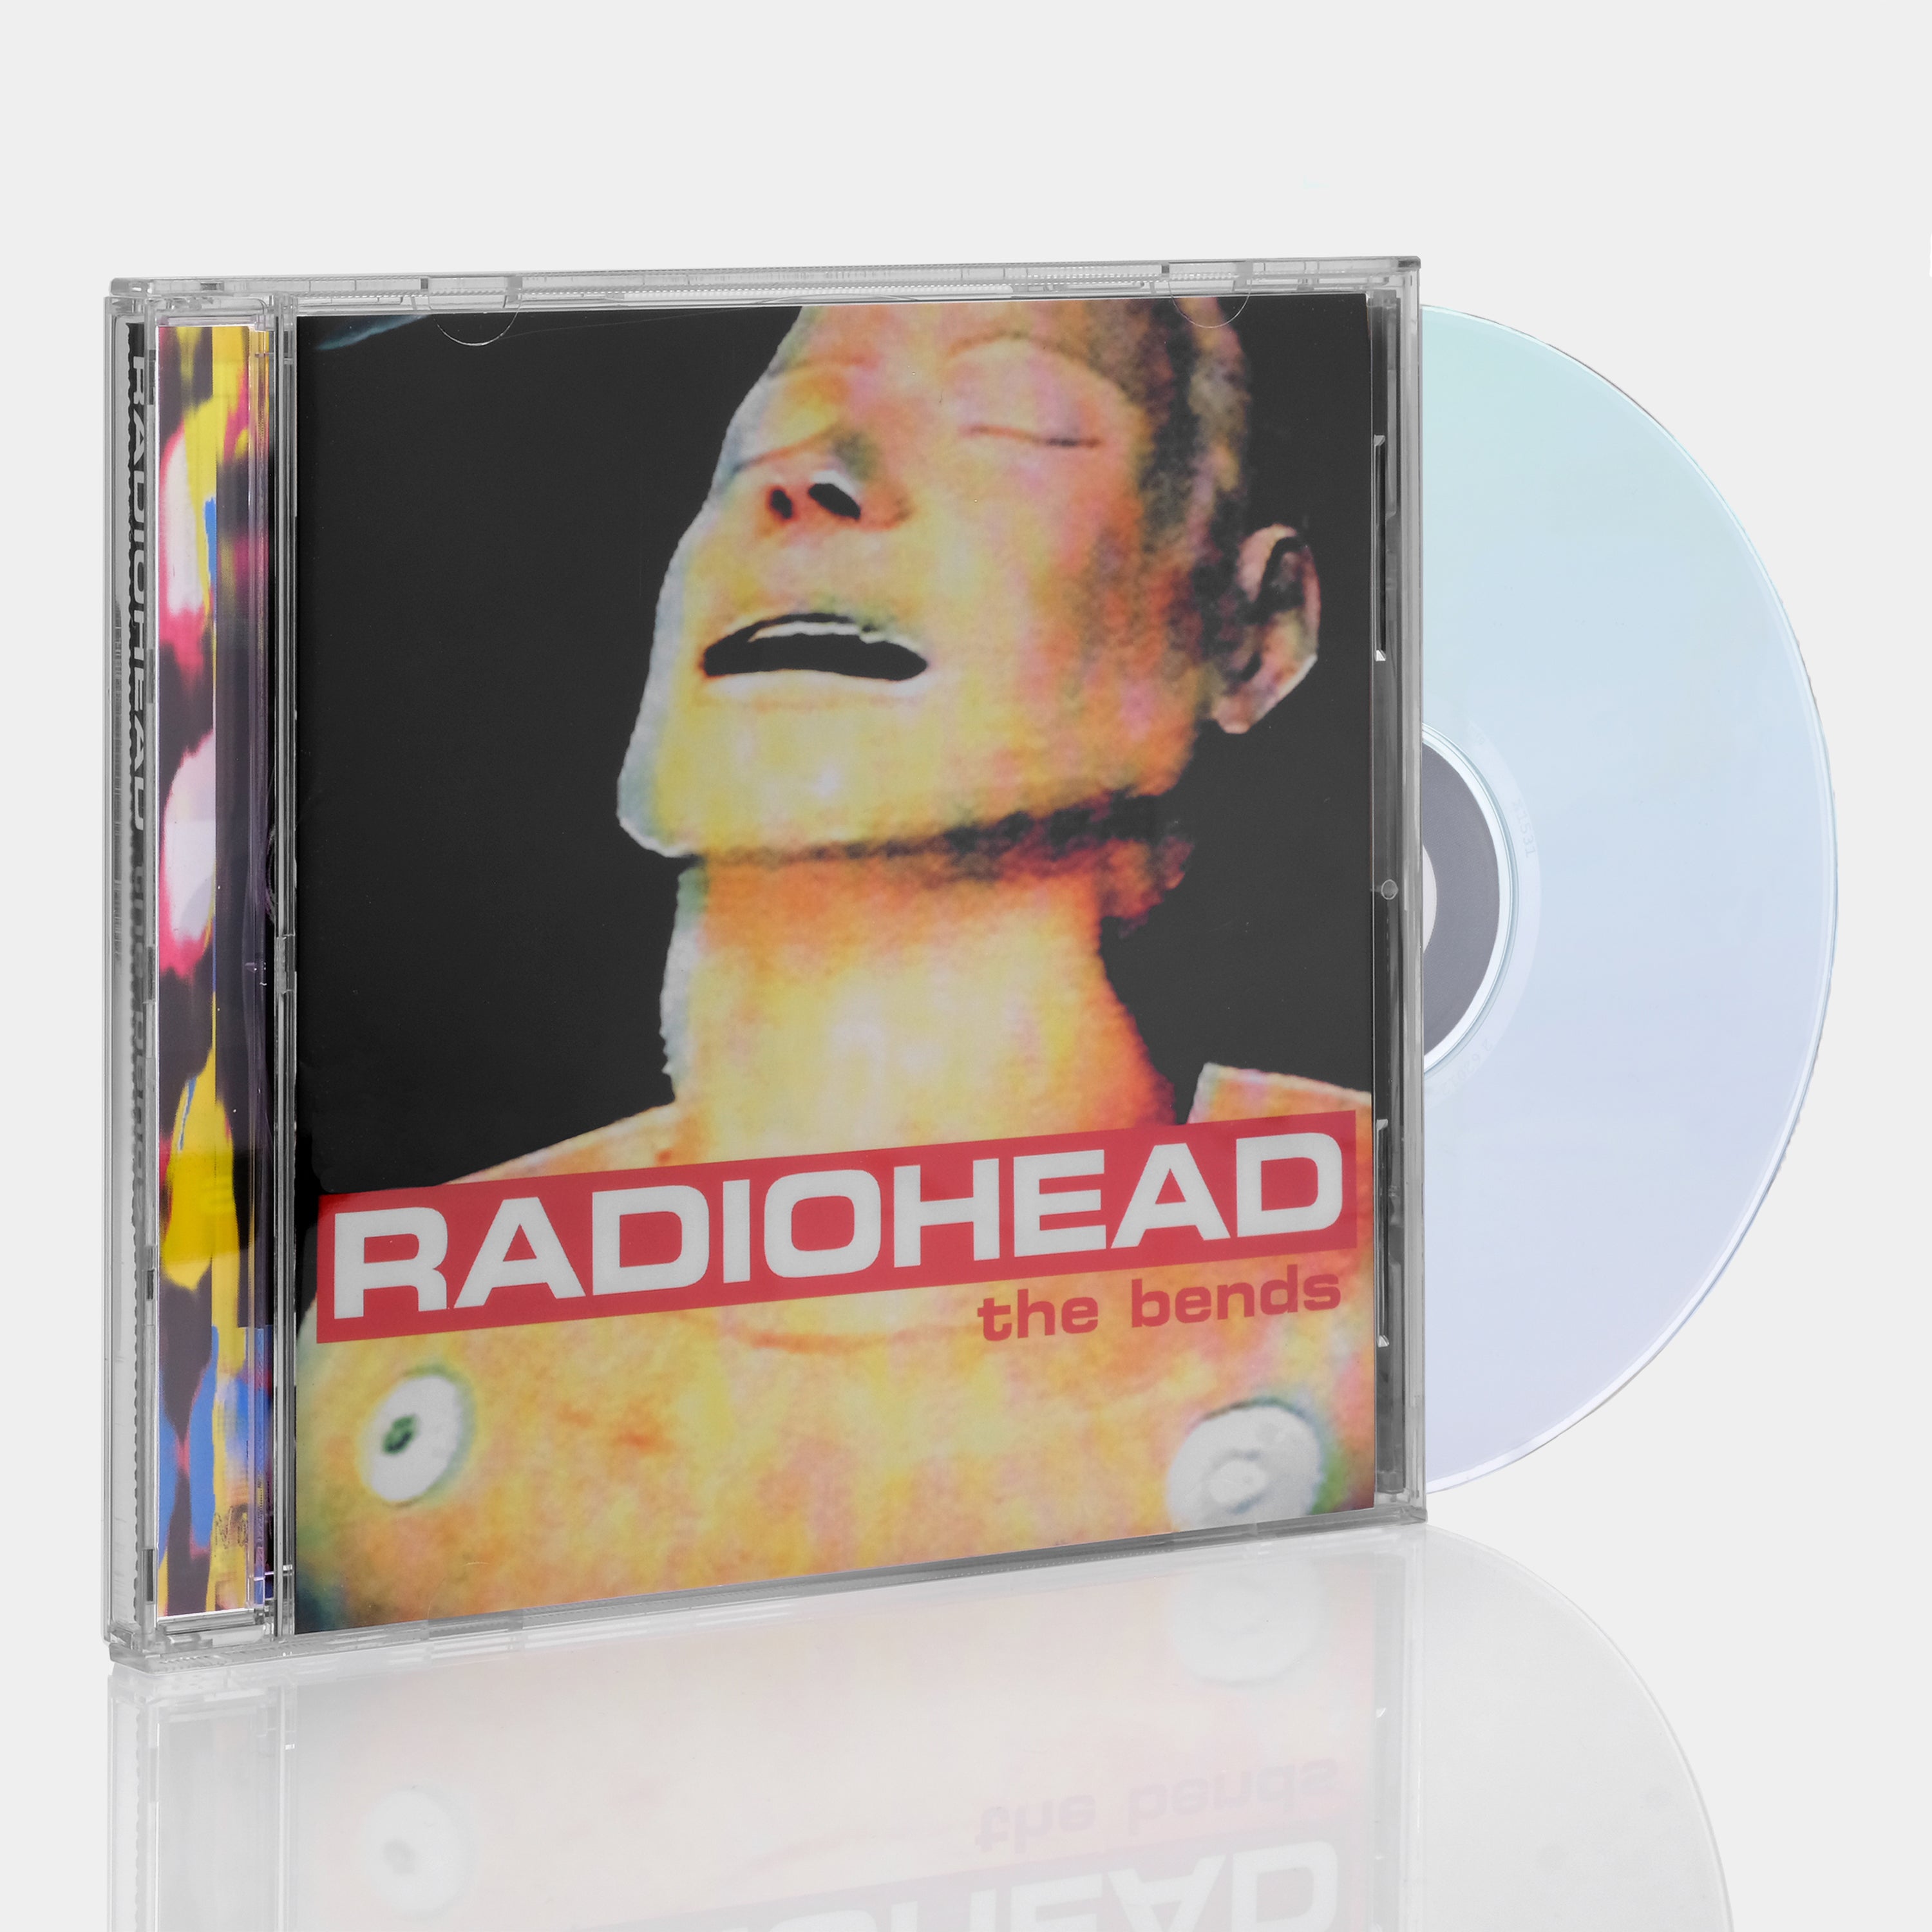 Radiohead - The Bends CD